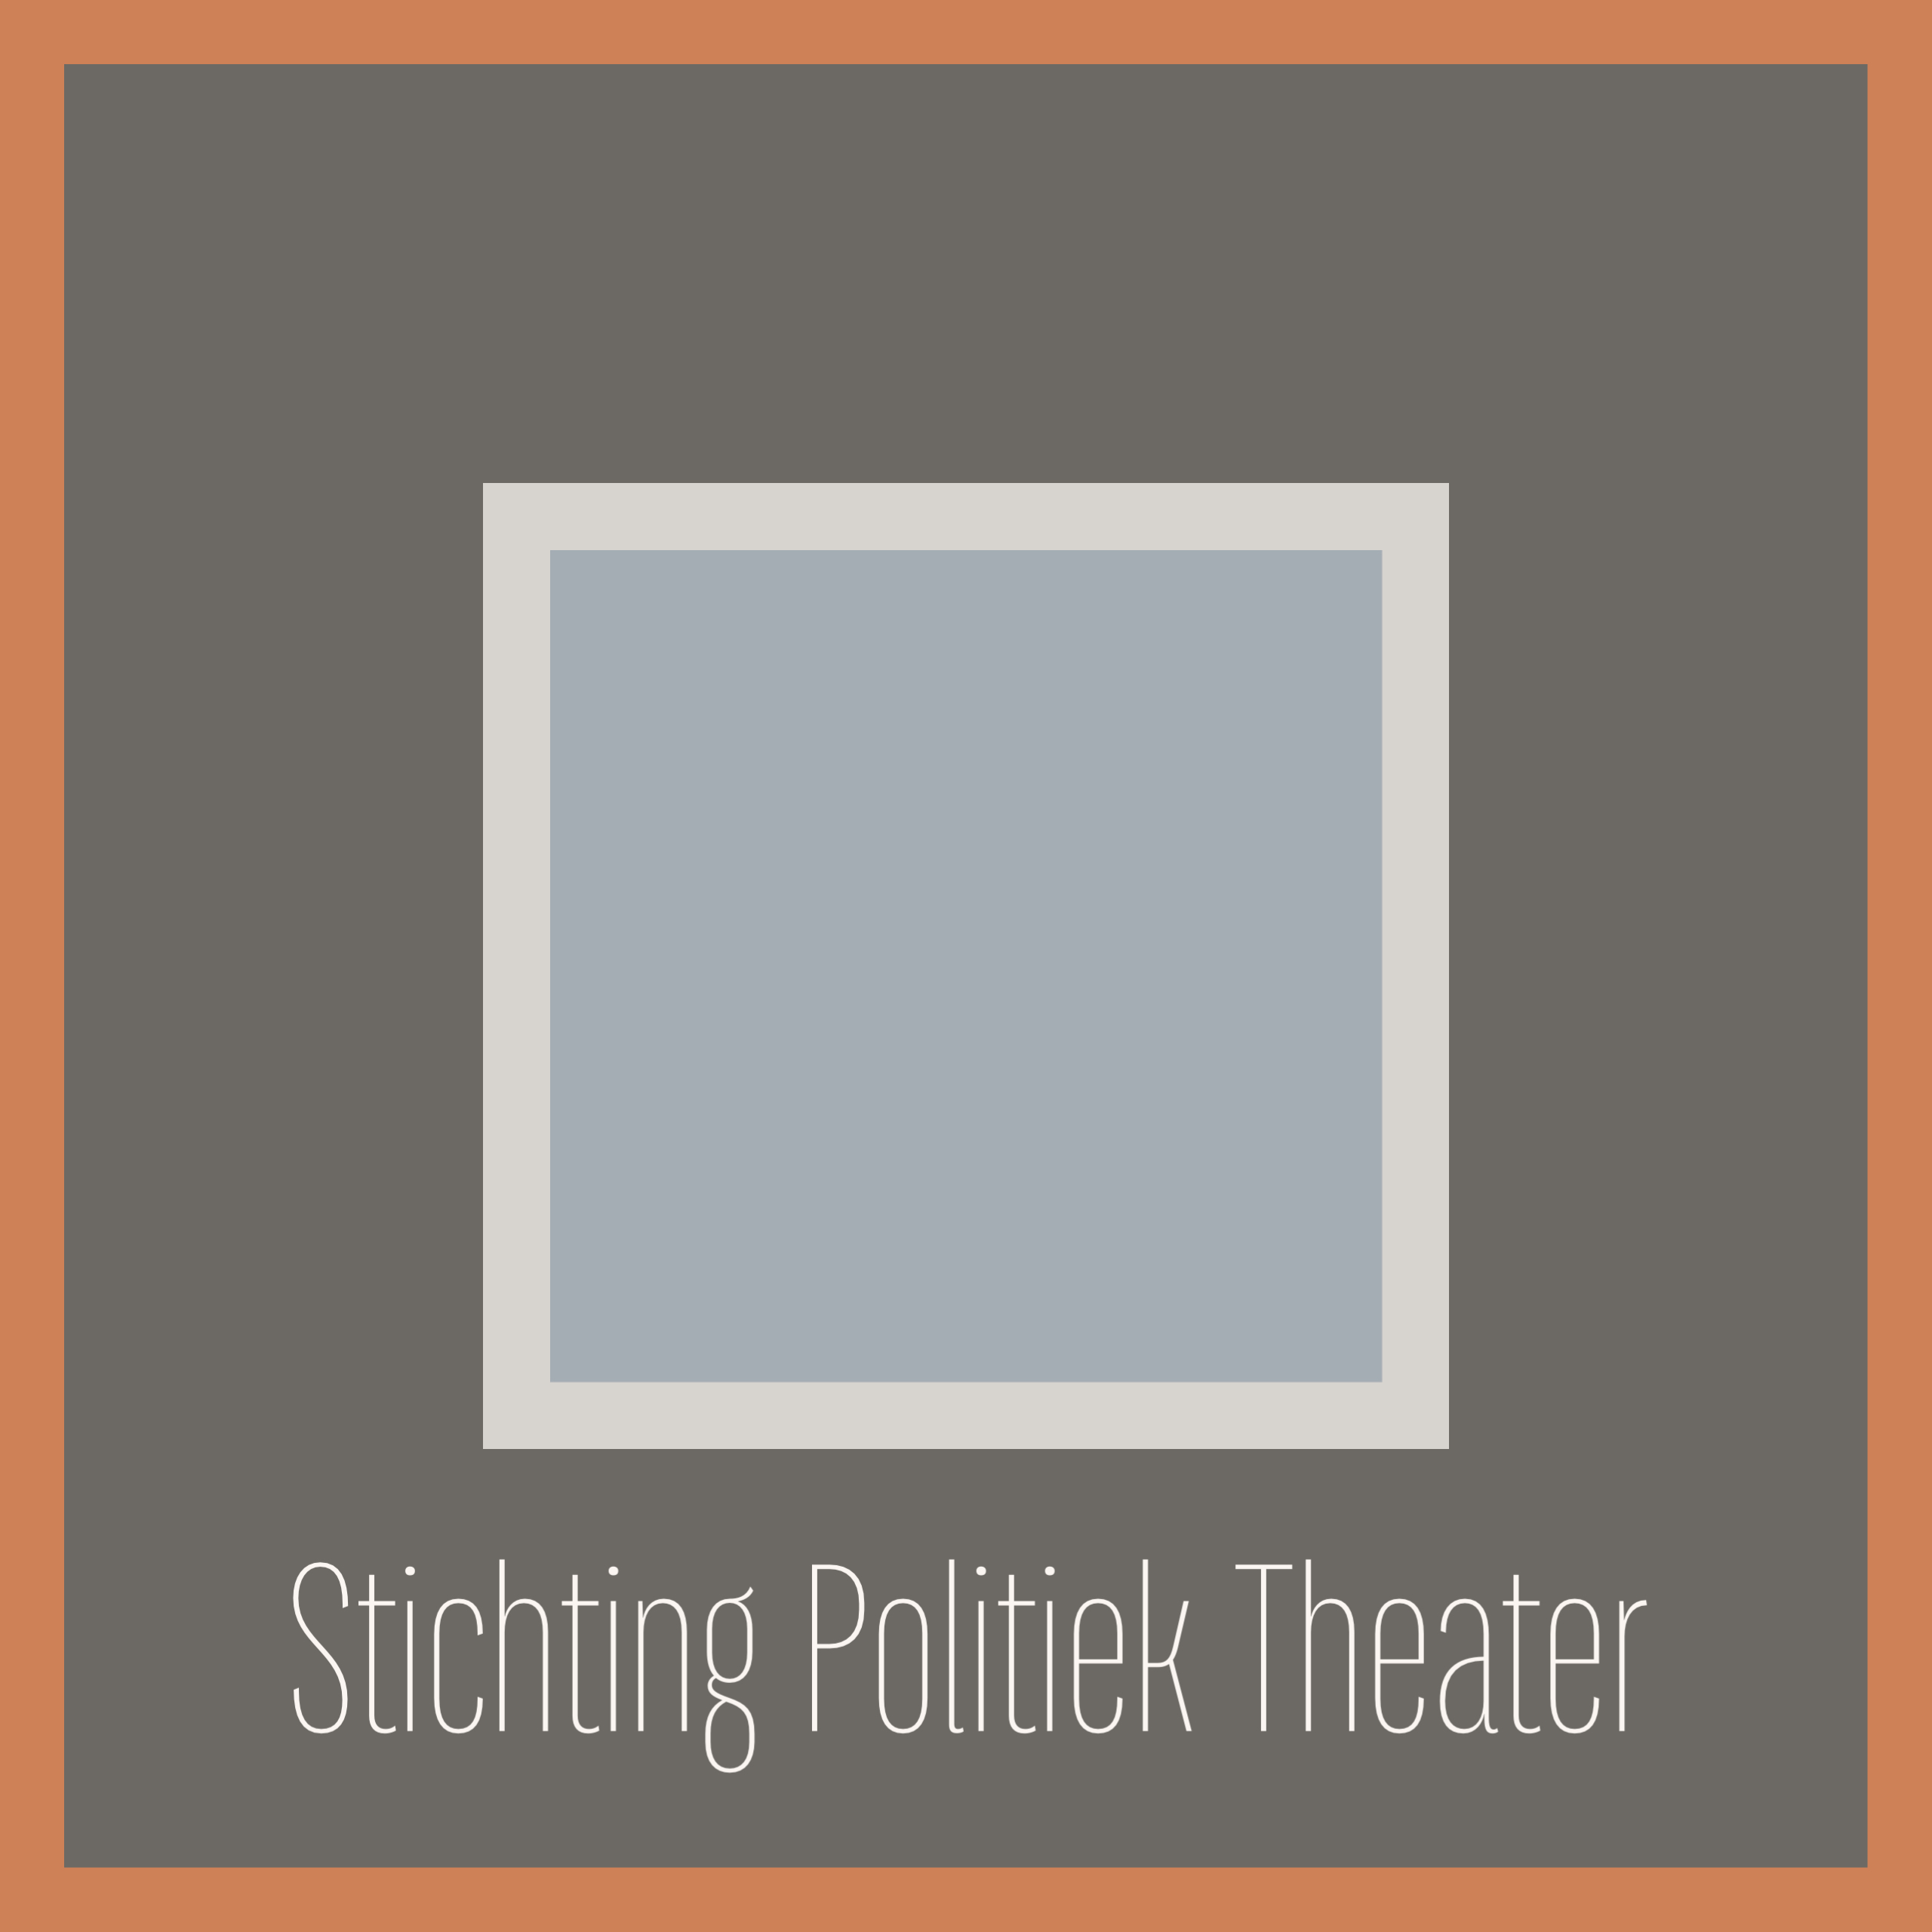 Stichting Politiek Theater